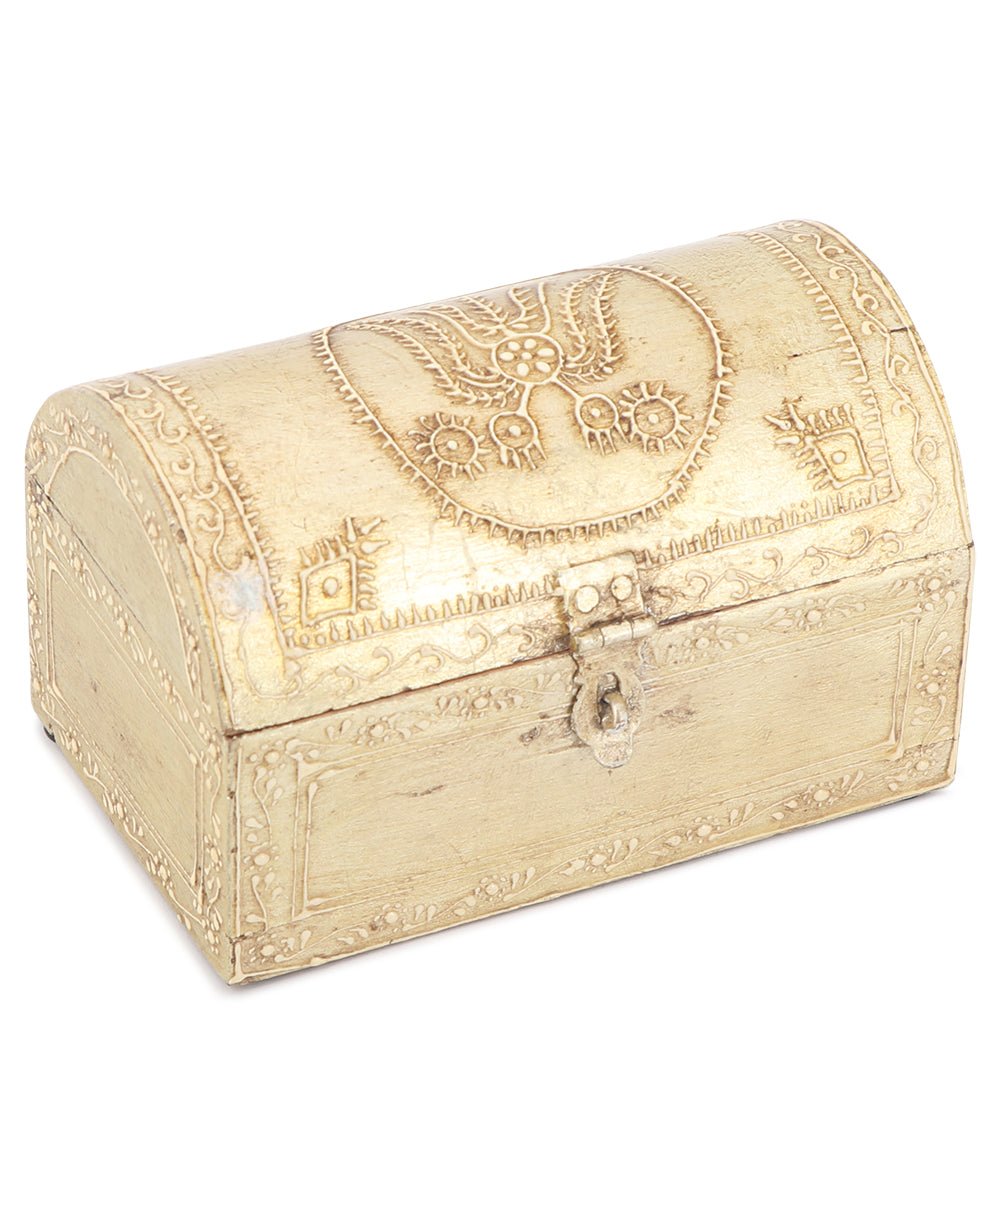 Iridescent Cream Small Keepsake Small Decorative Box - Gift Boxes & Tins